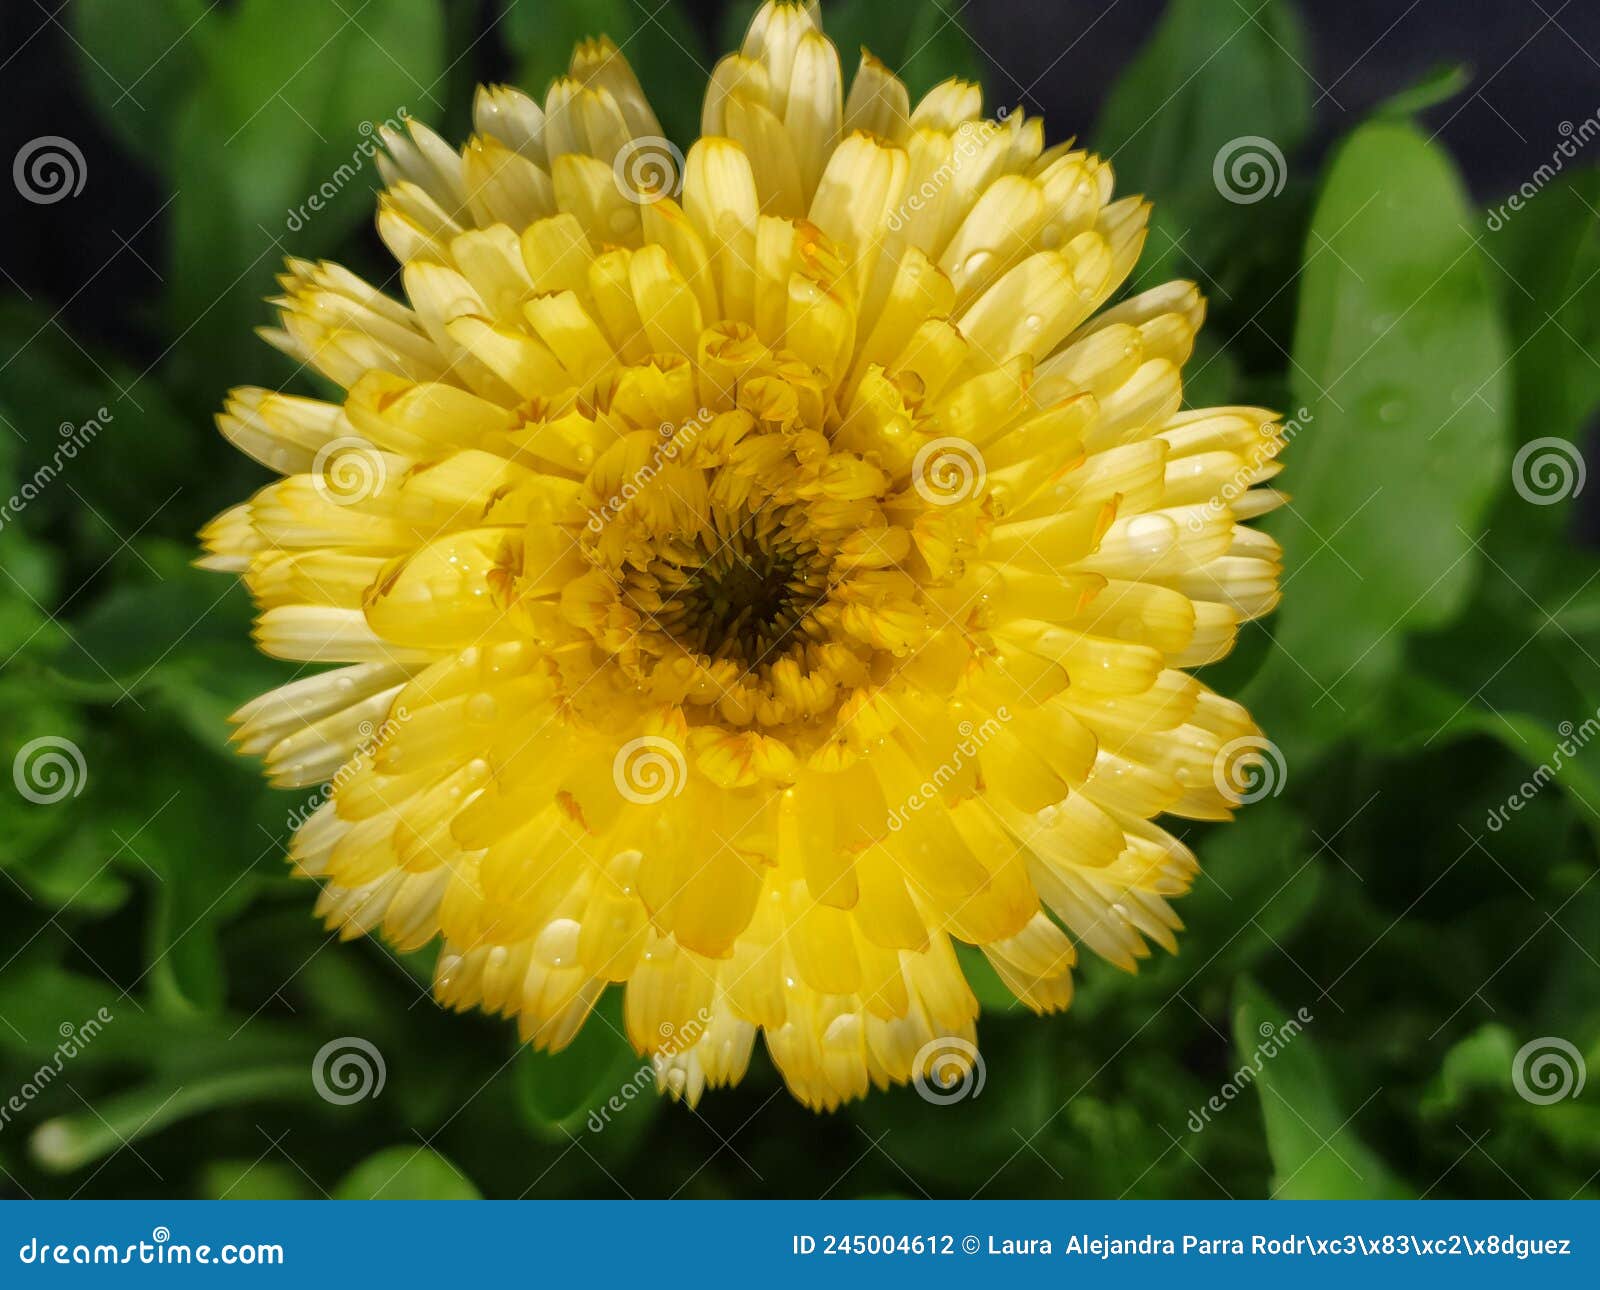 a single marigold flower yellow freshly watered. una sola flor de calÃÂ©ndula color amarillo, reciÃÂ©n regada.